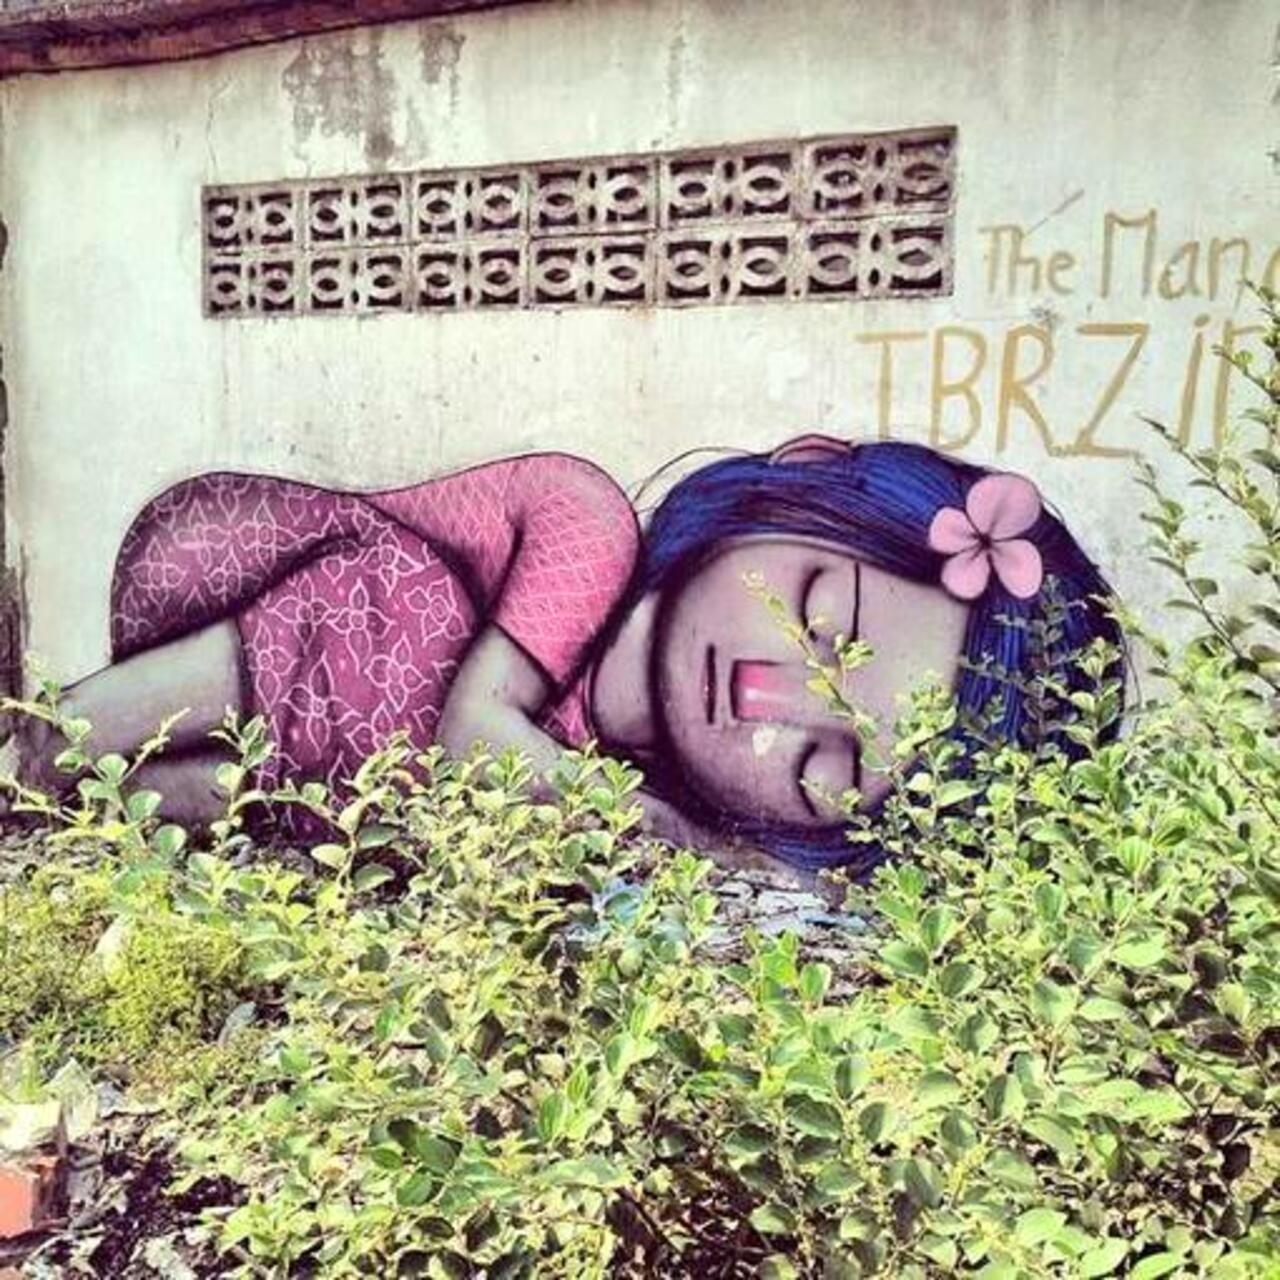 French artist Seth
Phnom Penh, Cambodia 
#streetart #art #graffiti #mural http://t.co/G1c7GII5eh